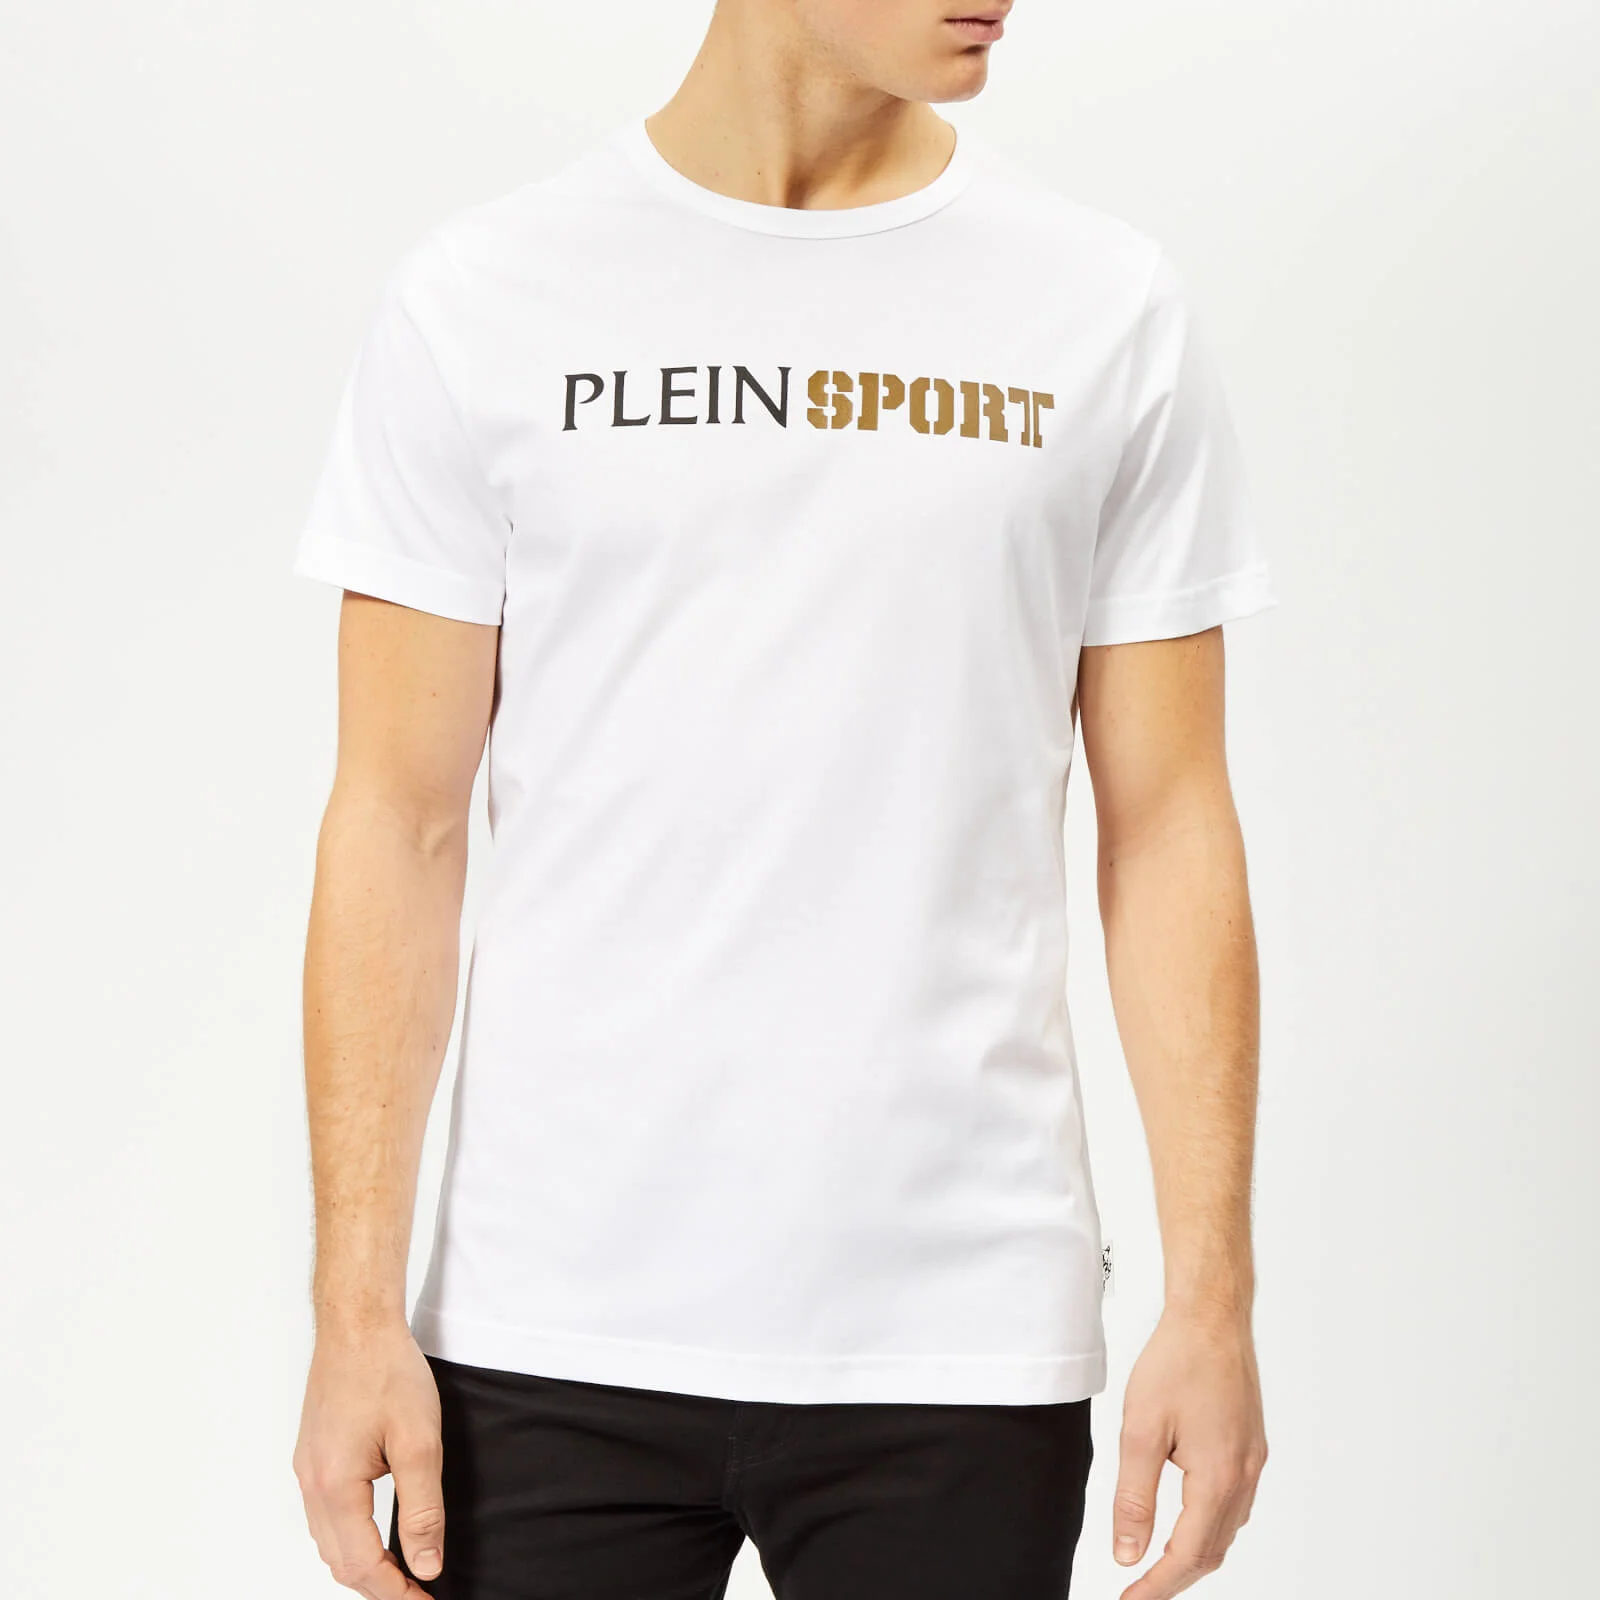 Plein Sport Men's Original T-Shirt - White Image 1